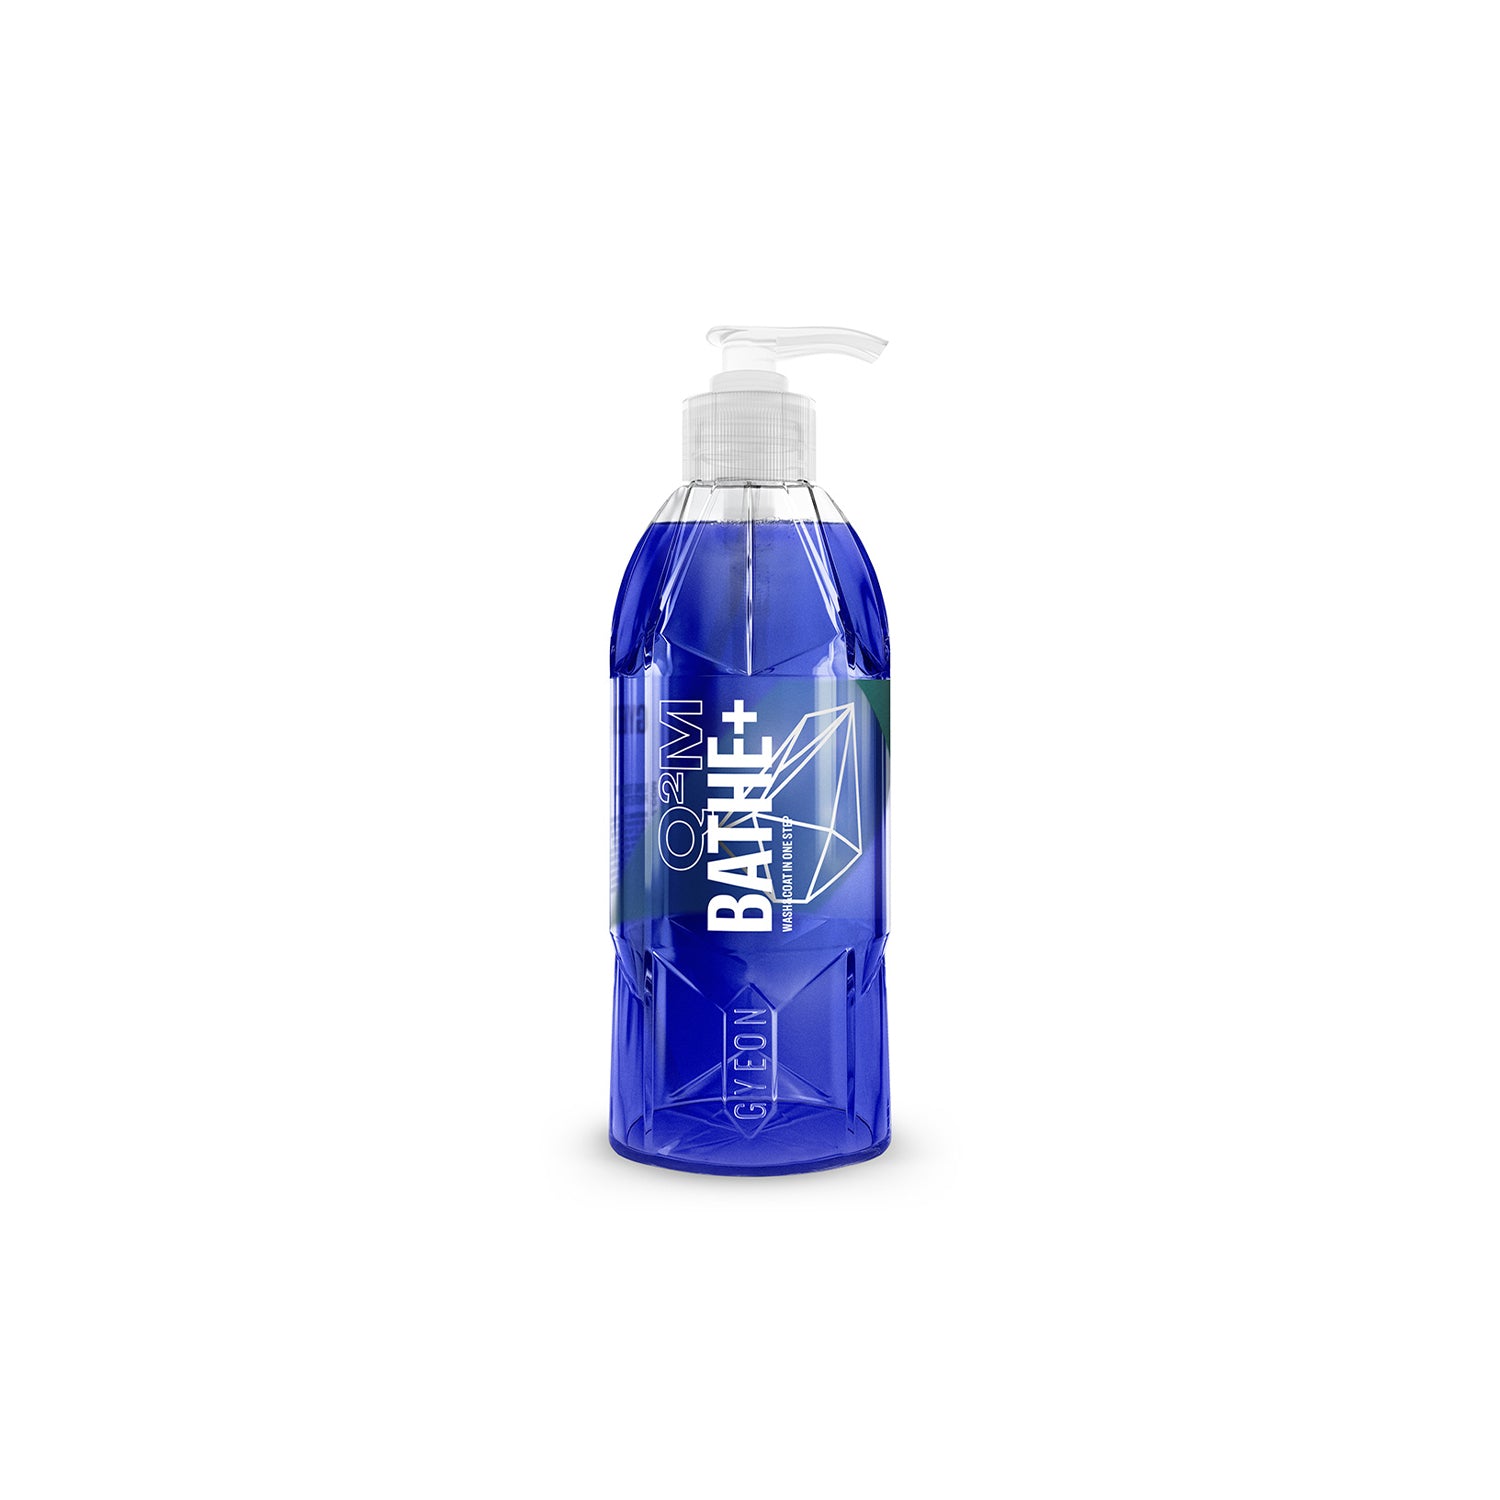 Gyeon Q2M Bathe+ Shampoo Car Wash 400ml Bottle - Available At R44 Detailing